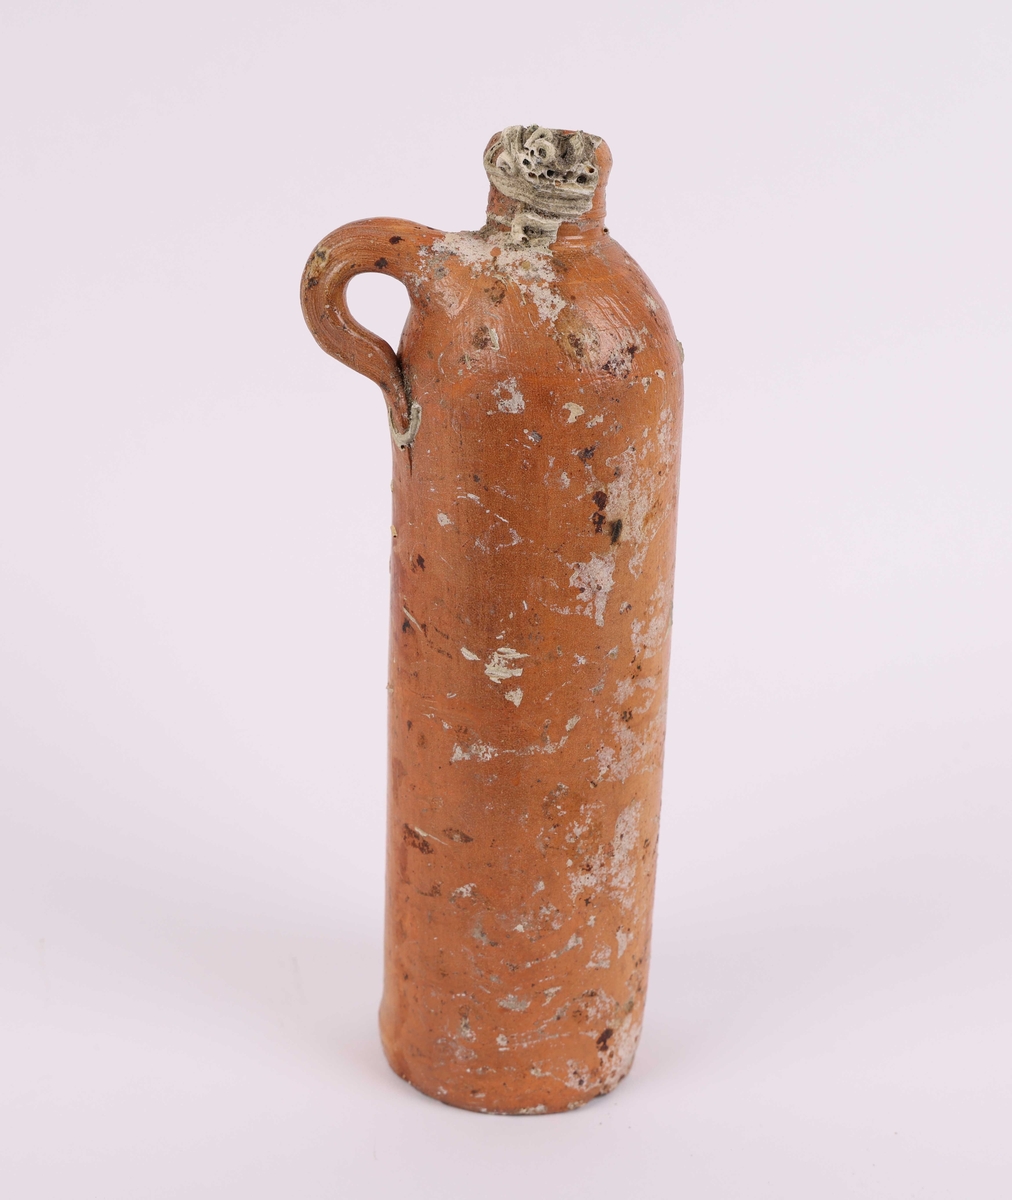 Beige seltersflaske i keramikk funnet ved Herdla, Askøy kommune.